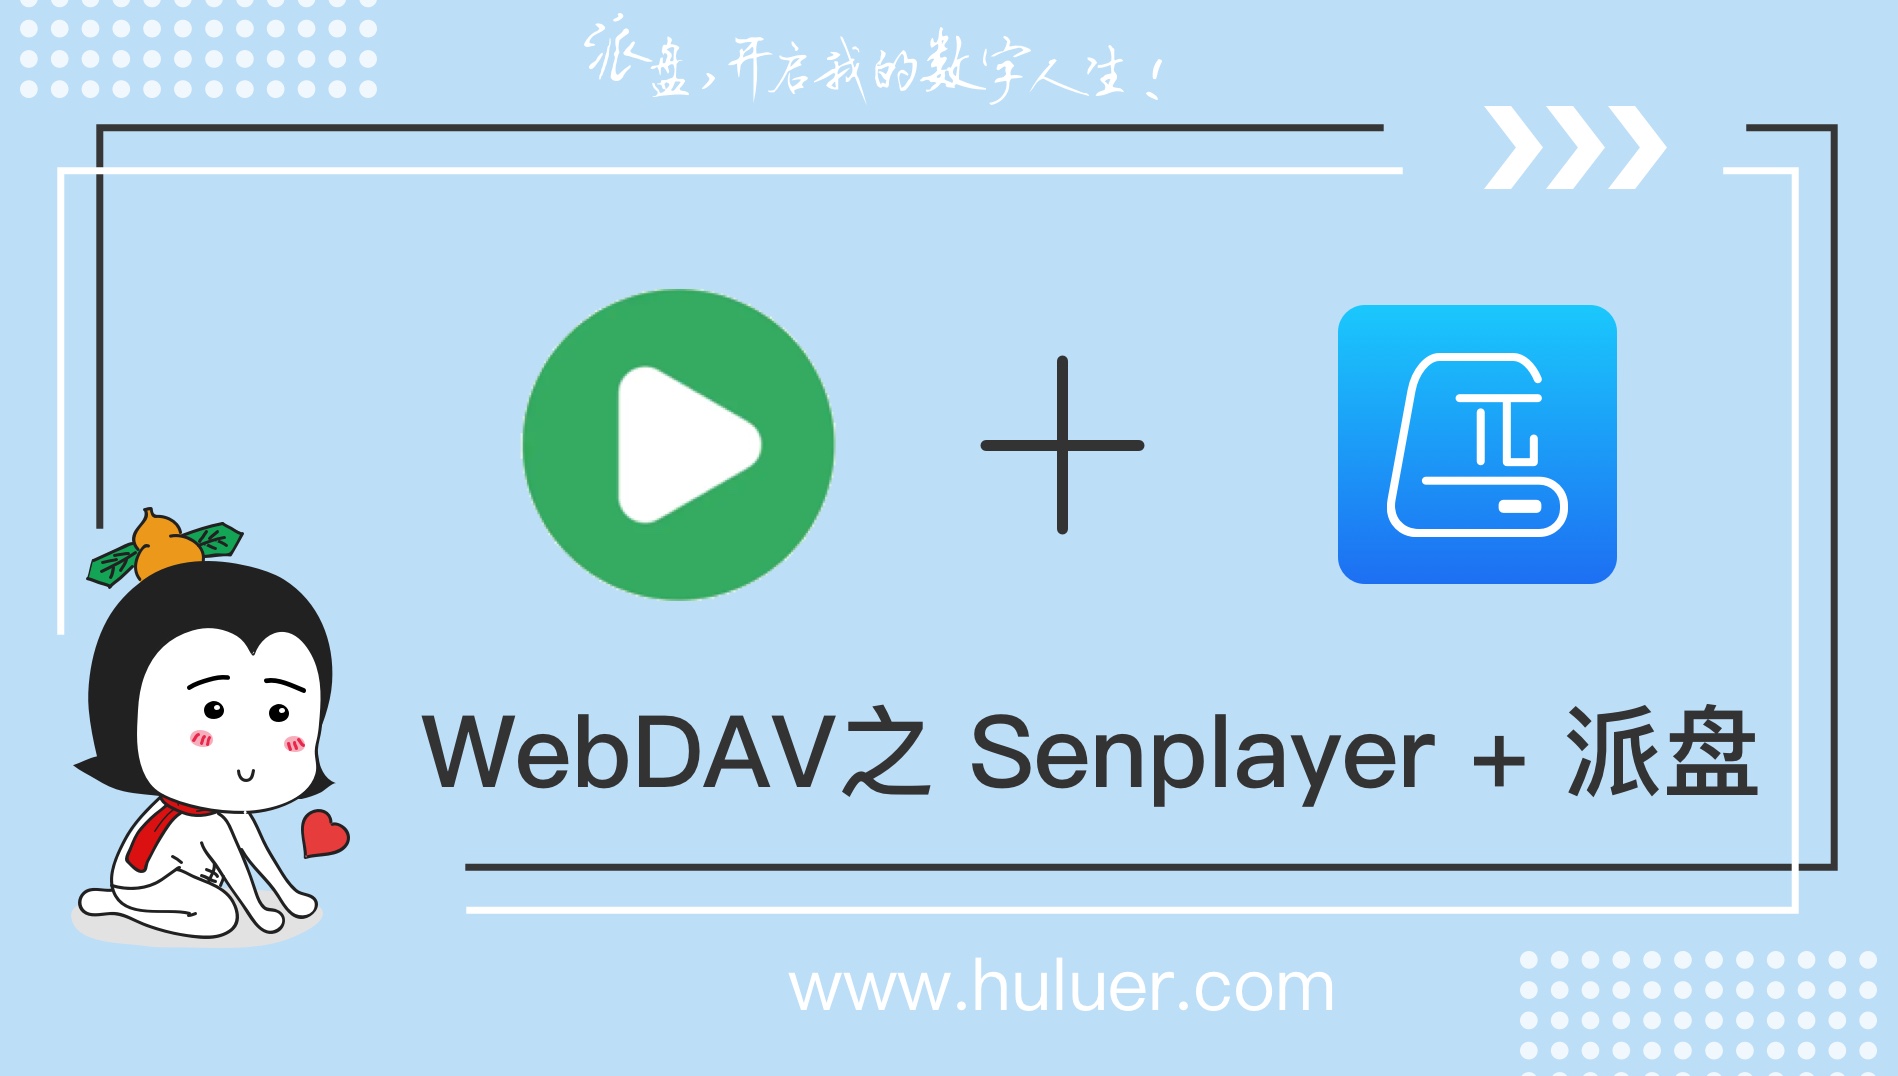 WebDAV之π-Disk派盘 + Senplayer